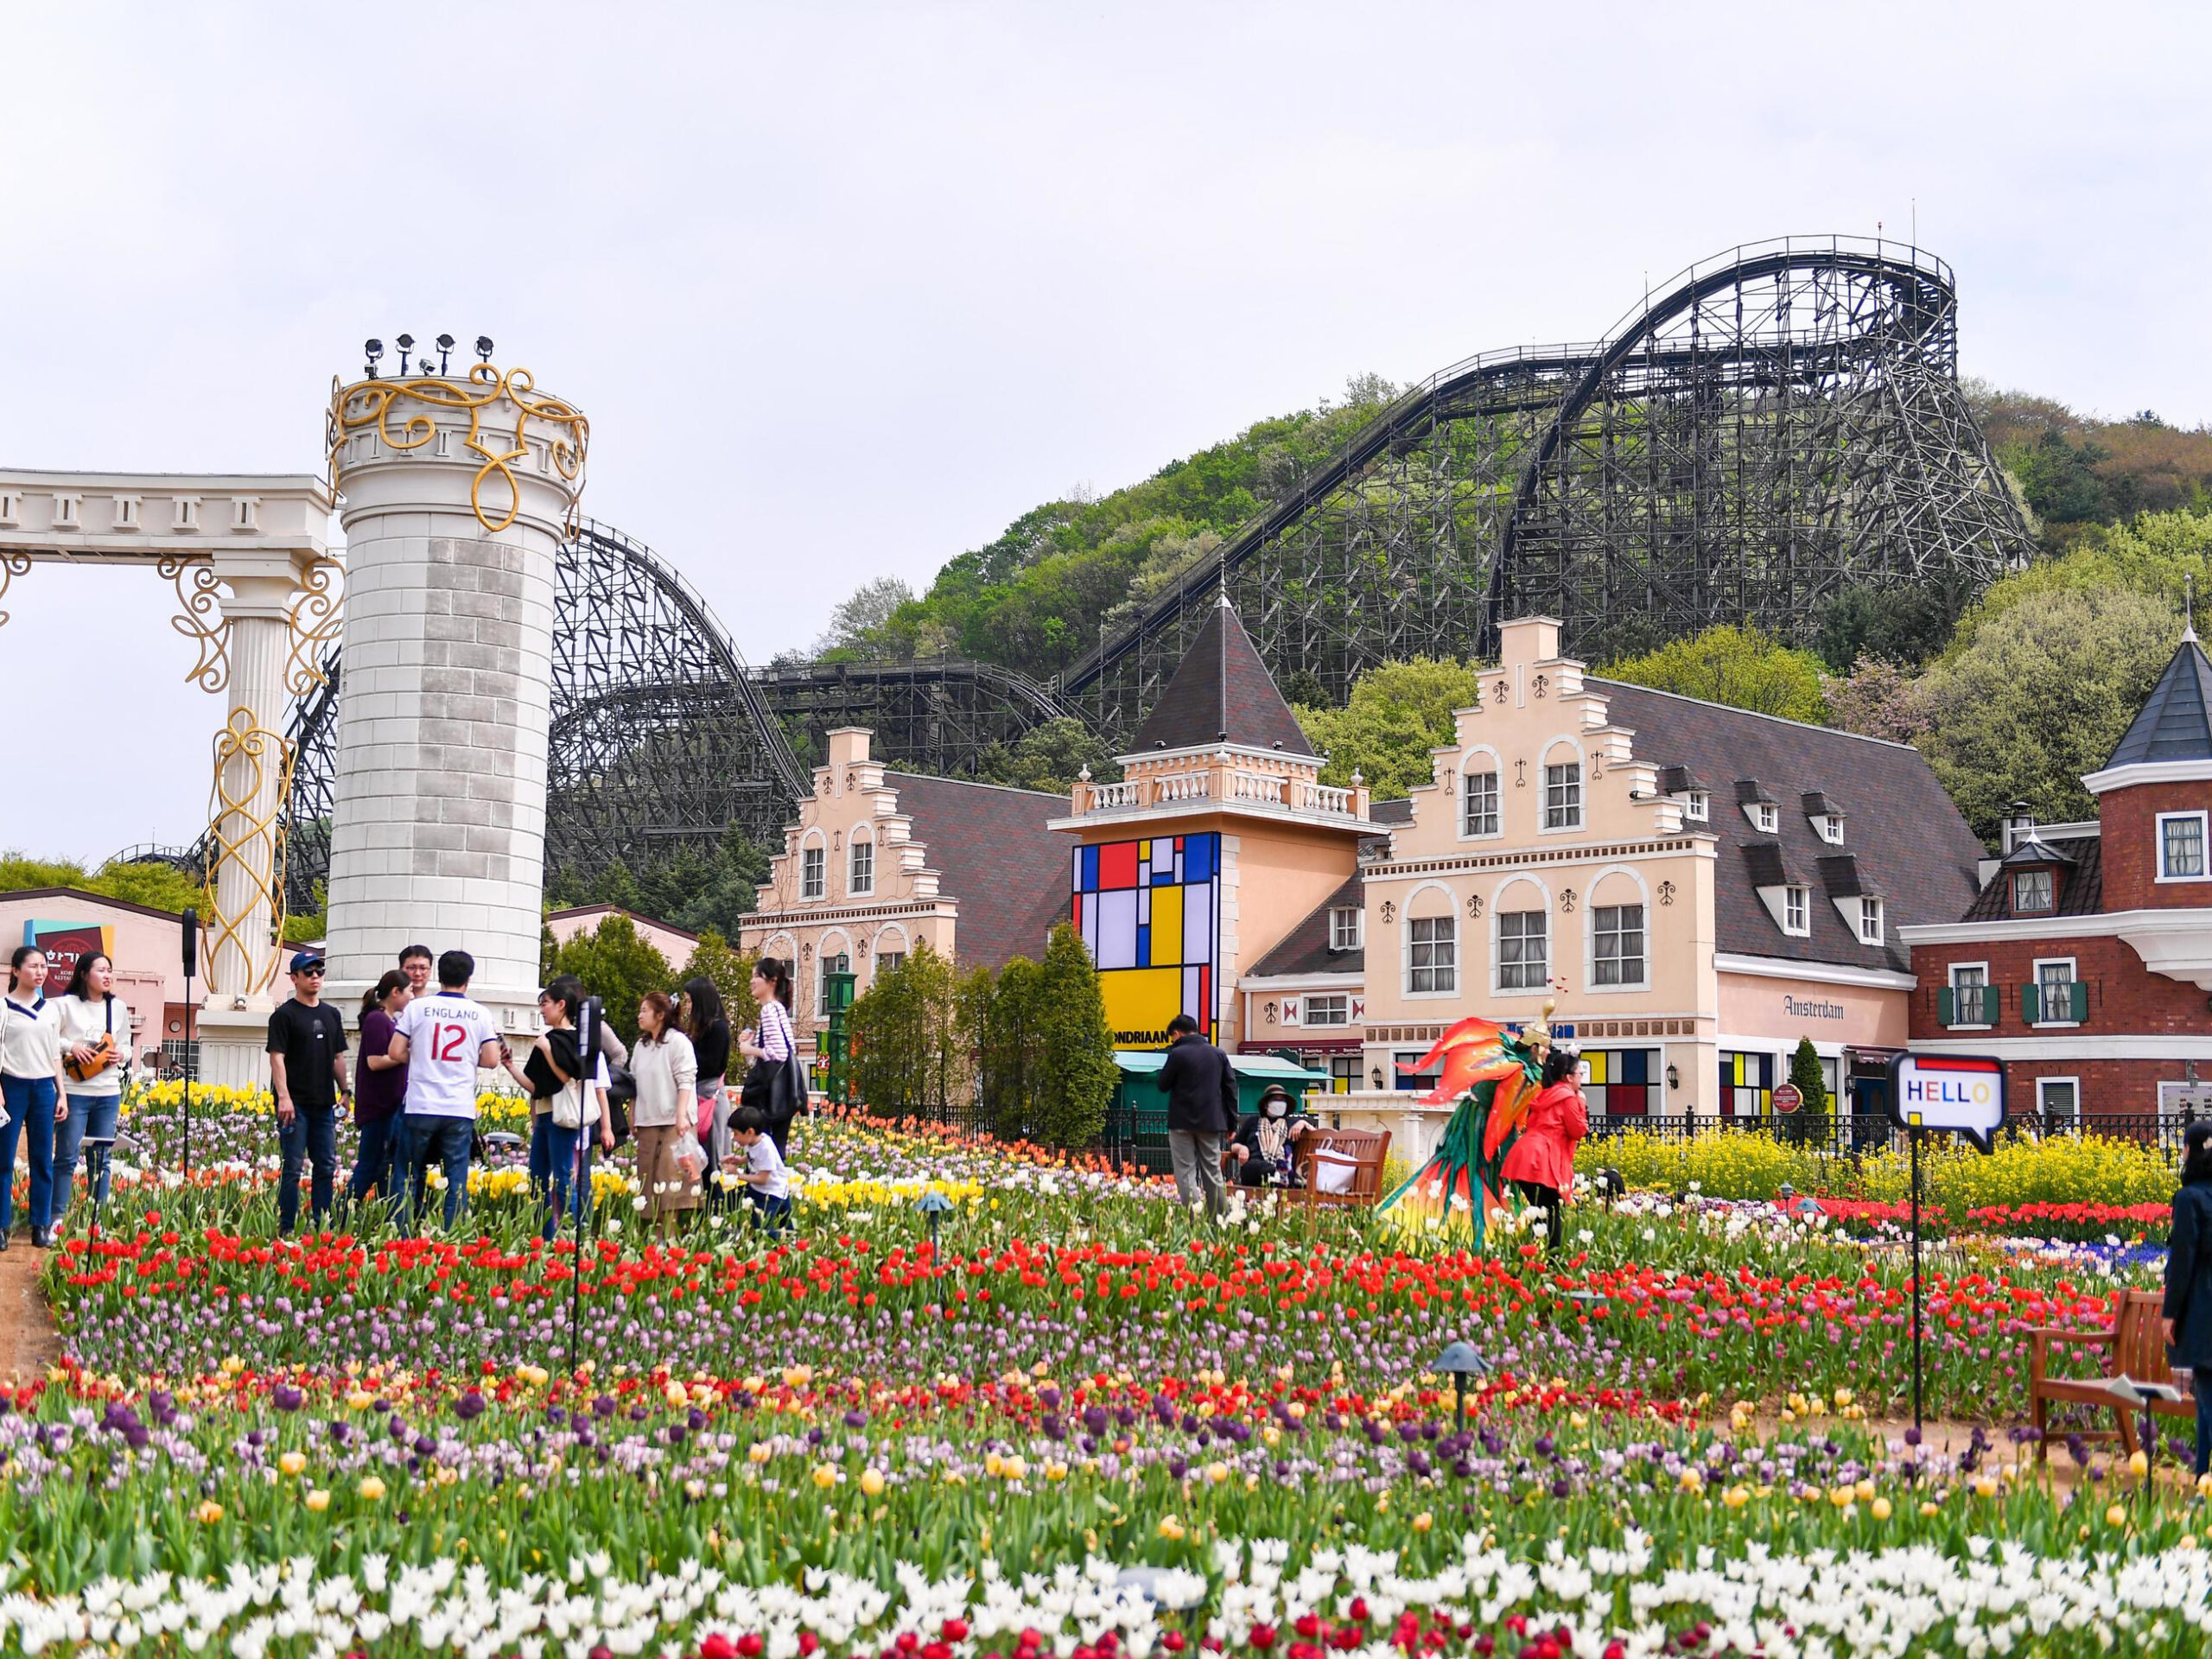 Theme parks around the world to explore from Dubai - Everland, South Korea